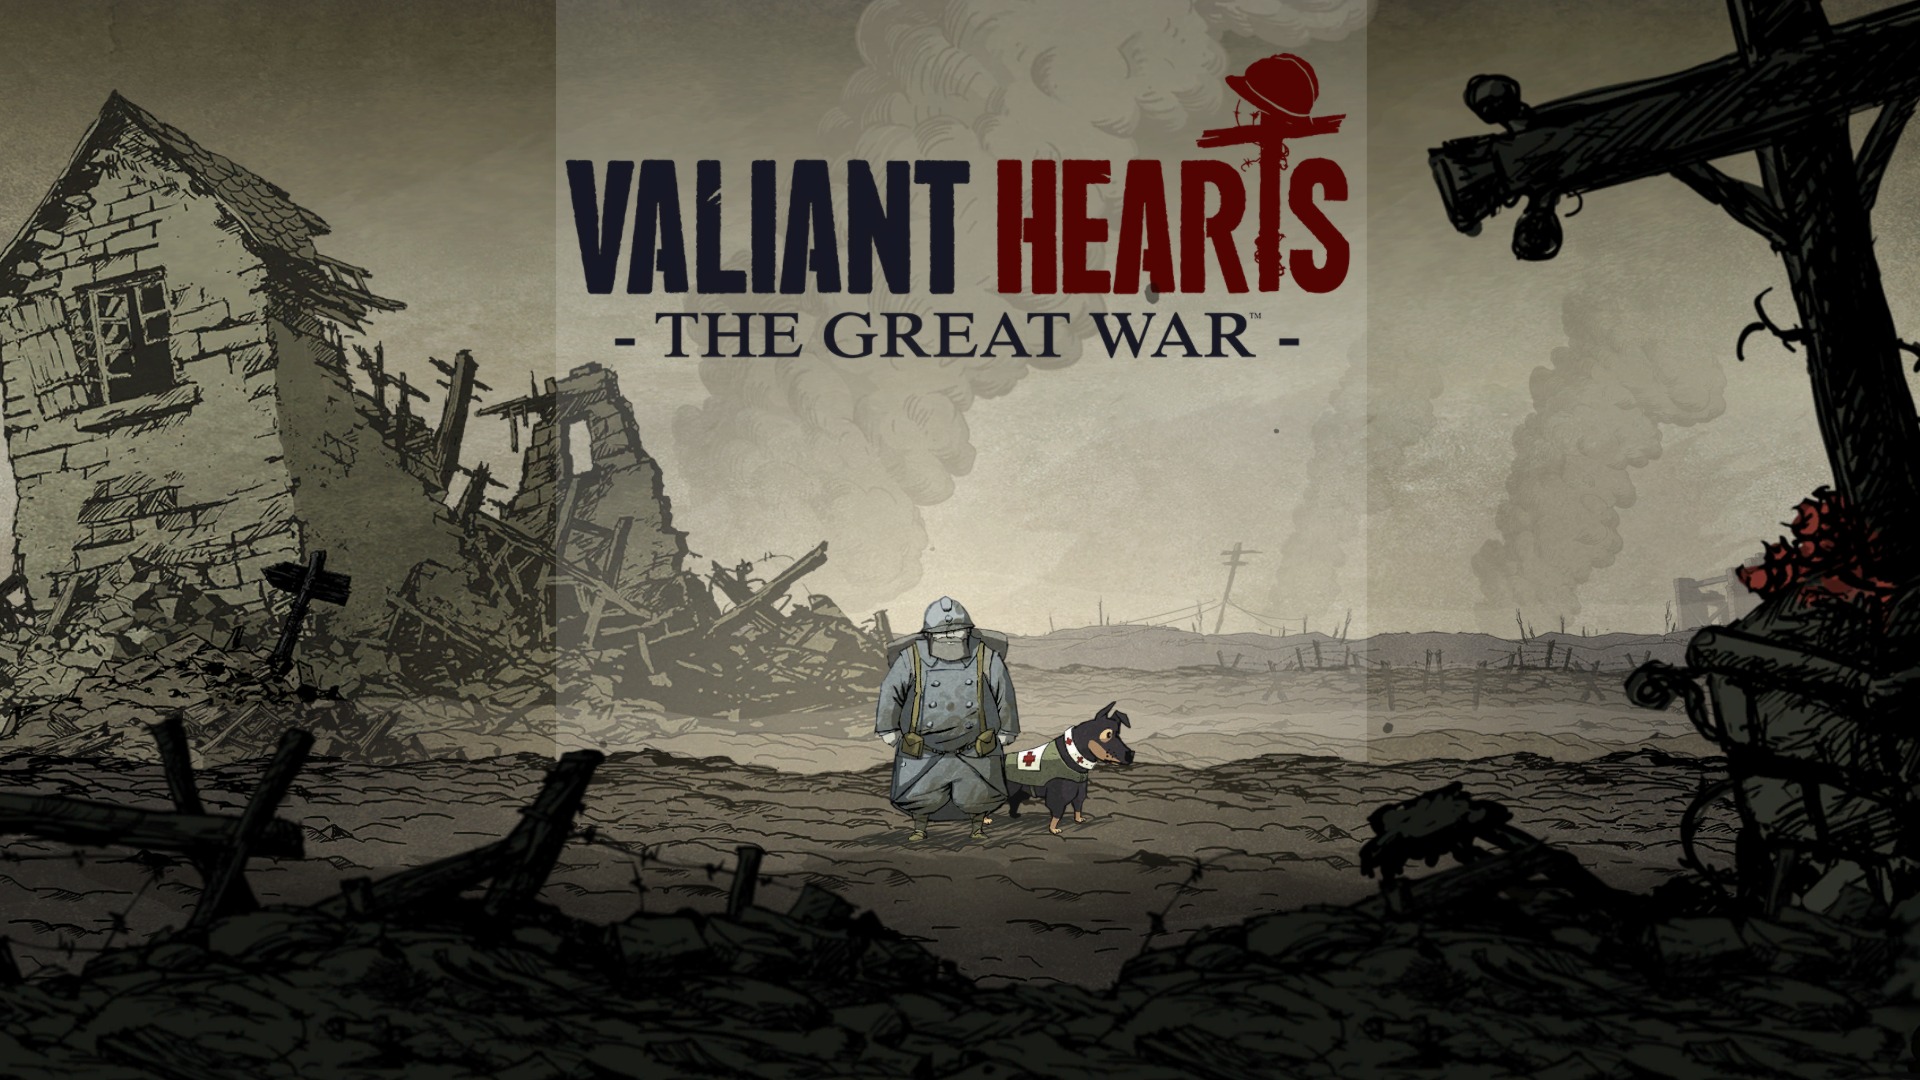 Valiant_Hearts__The_Great_War_20140625183117.jpg